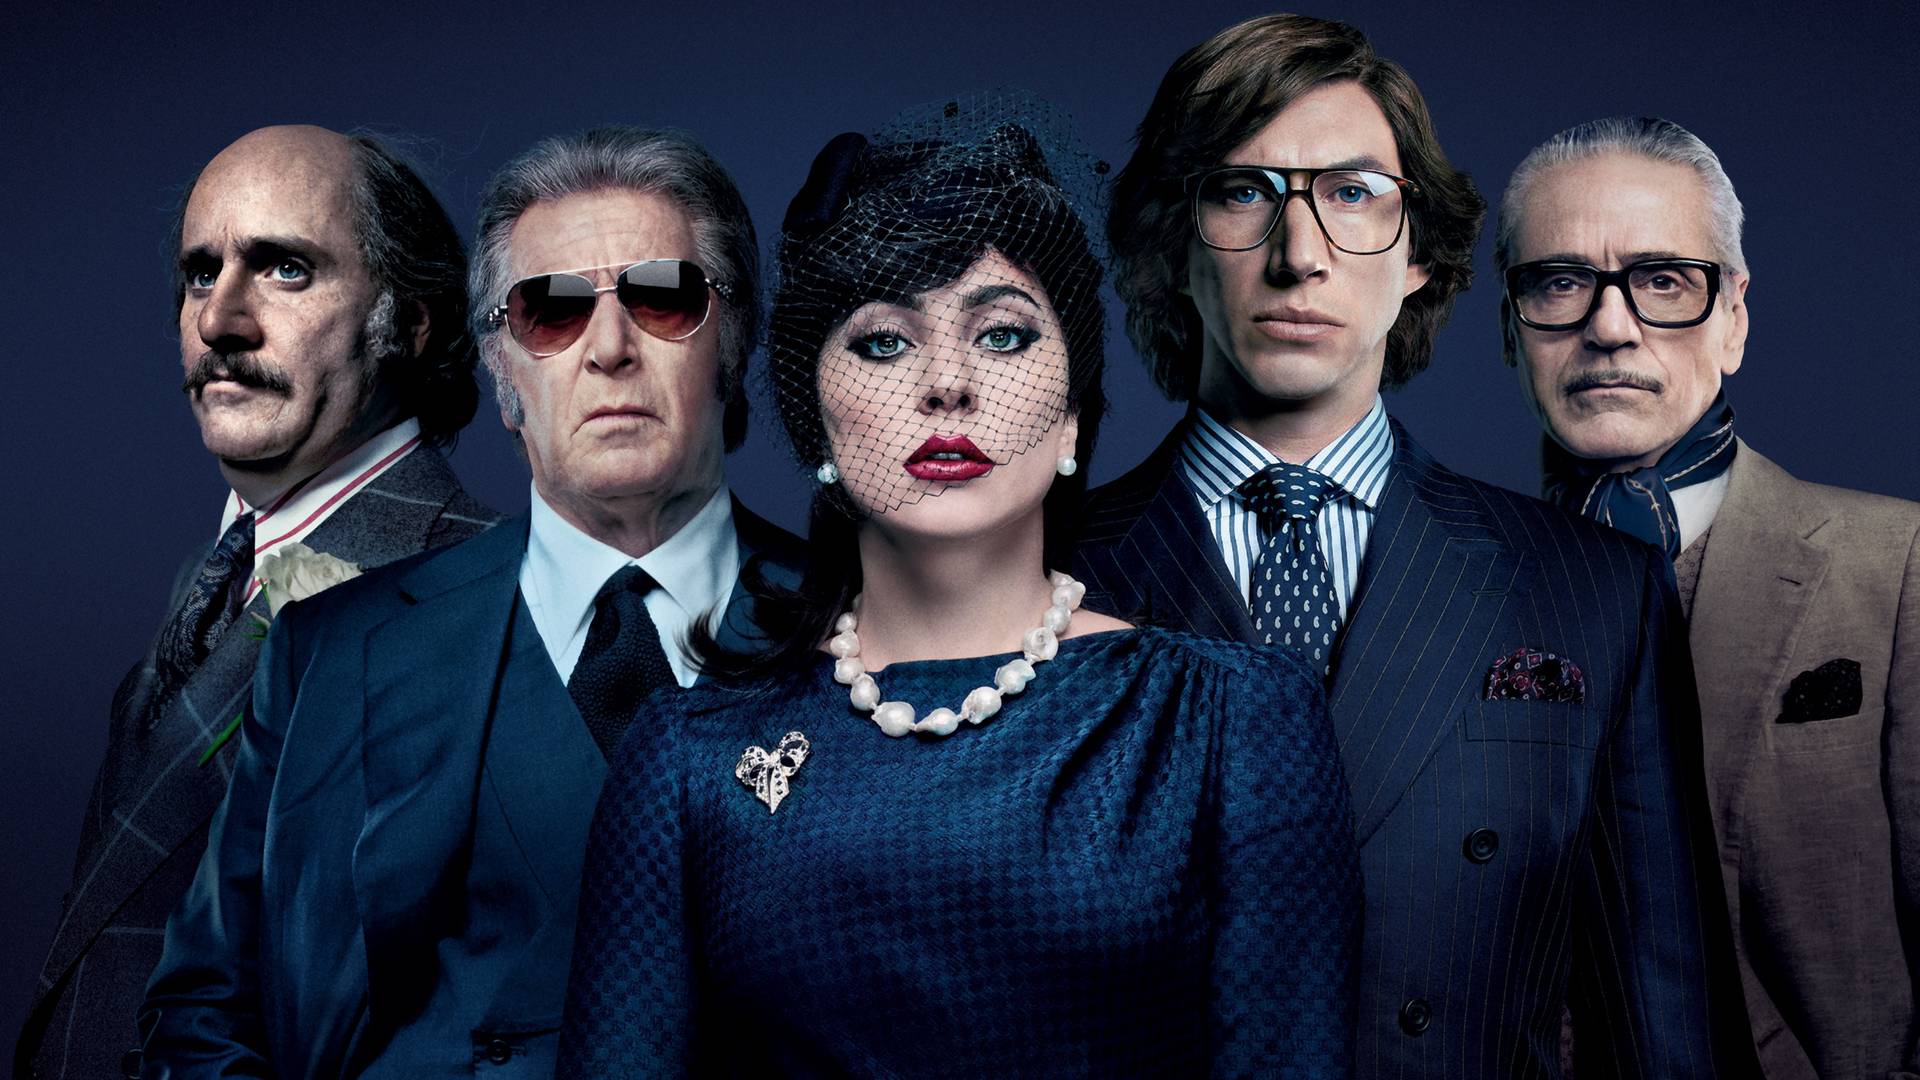 O čom bude film House of Gucci? Lady Gaga schytala od Patrizie Reggiani ostrú kritiku